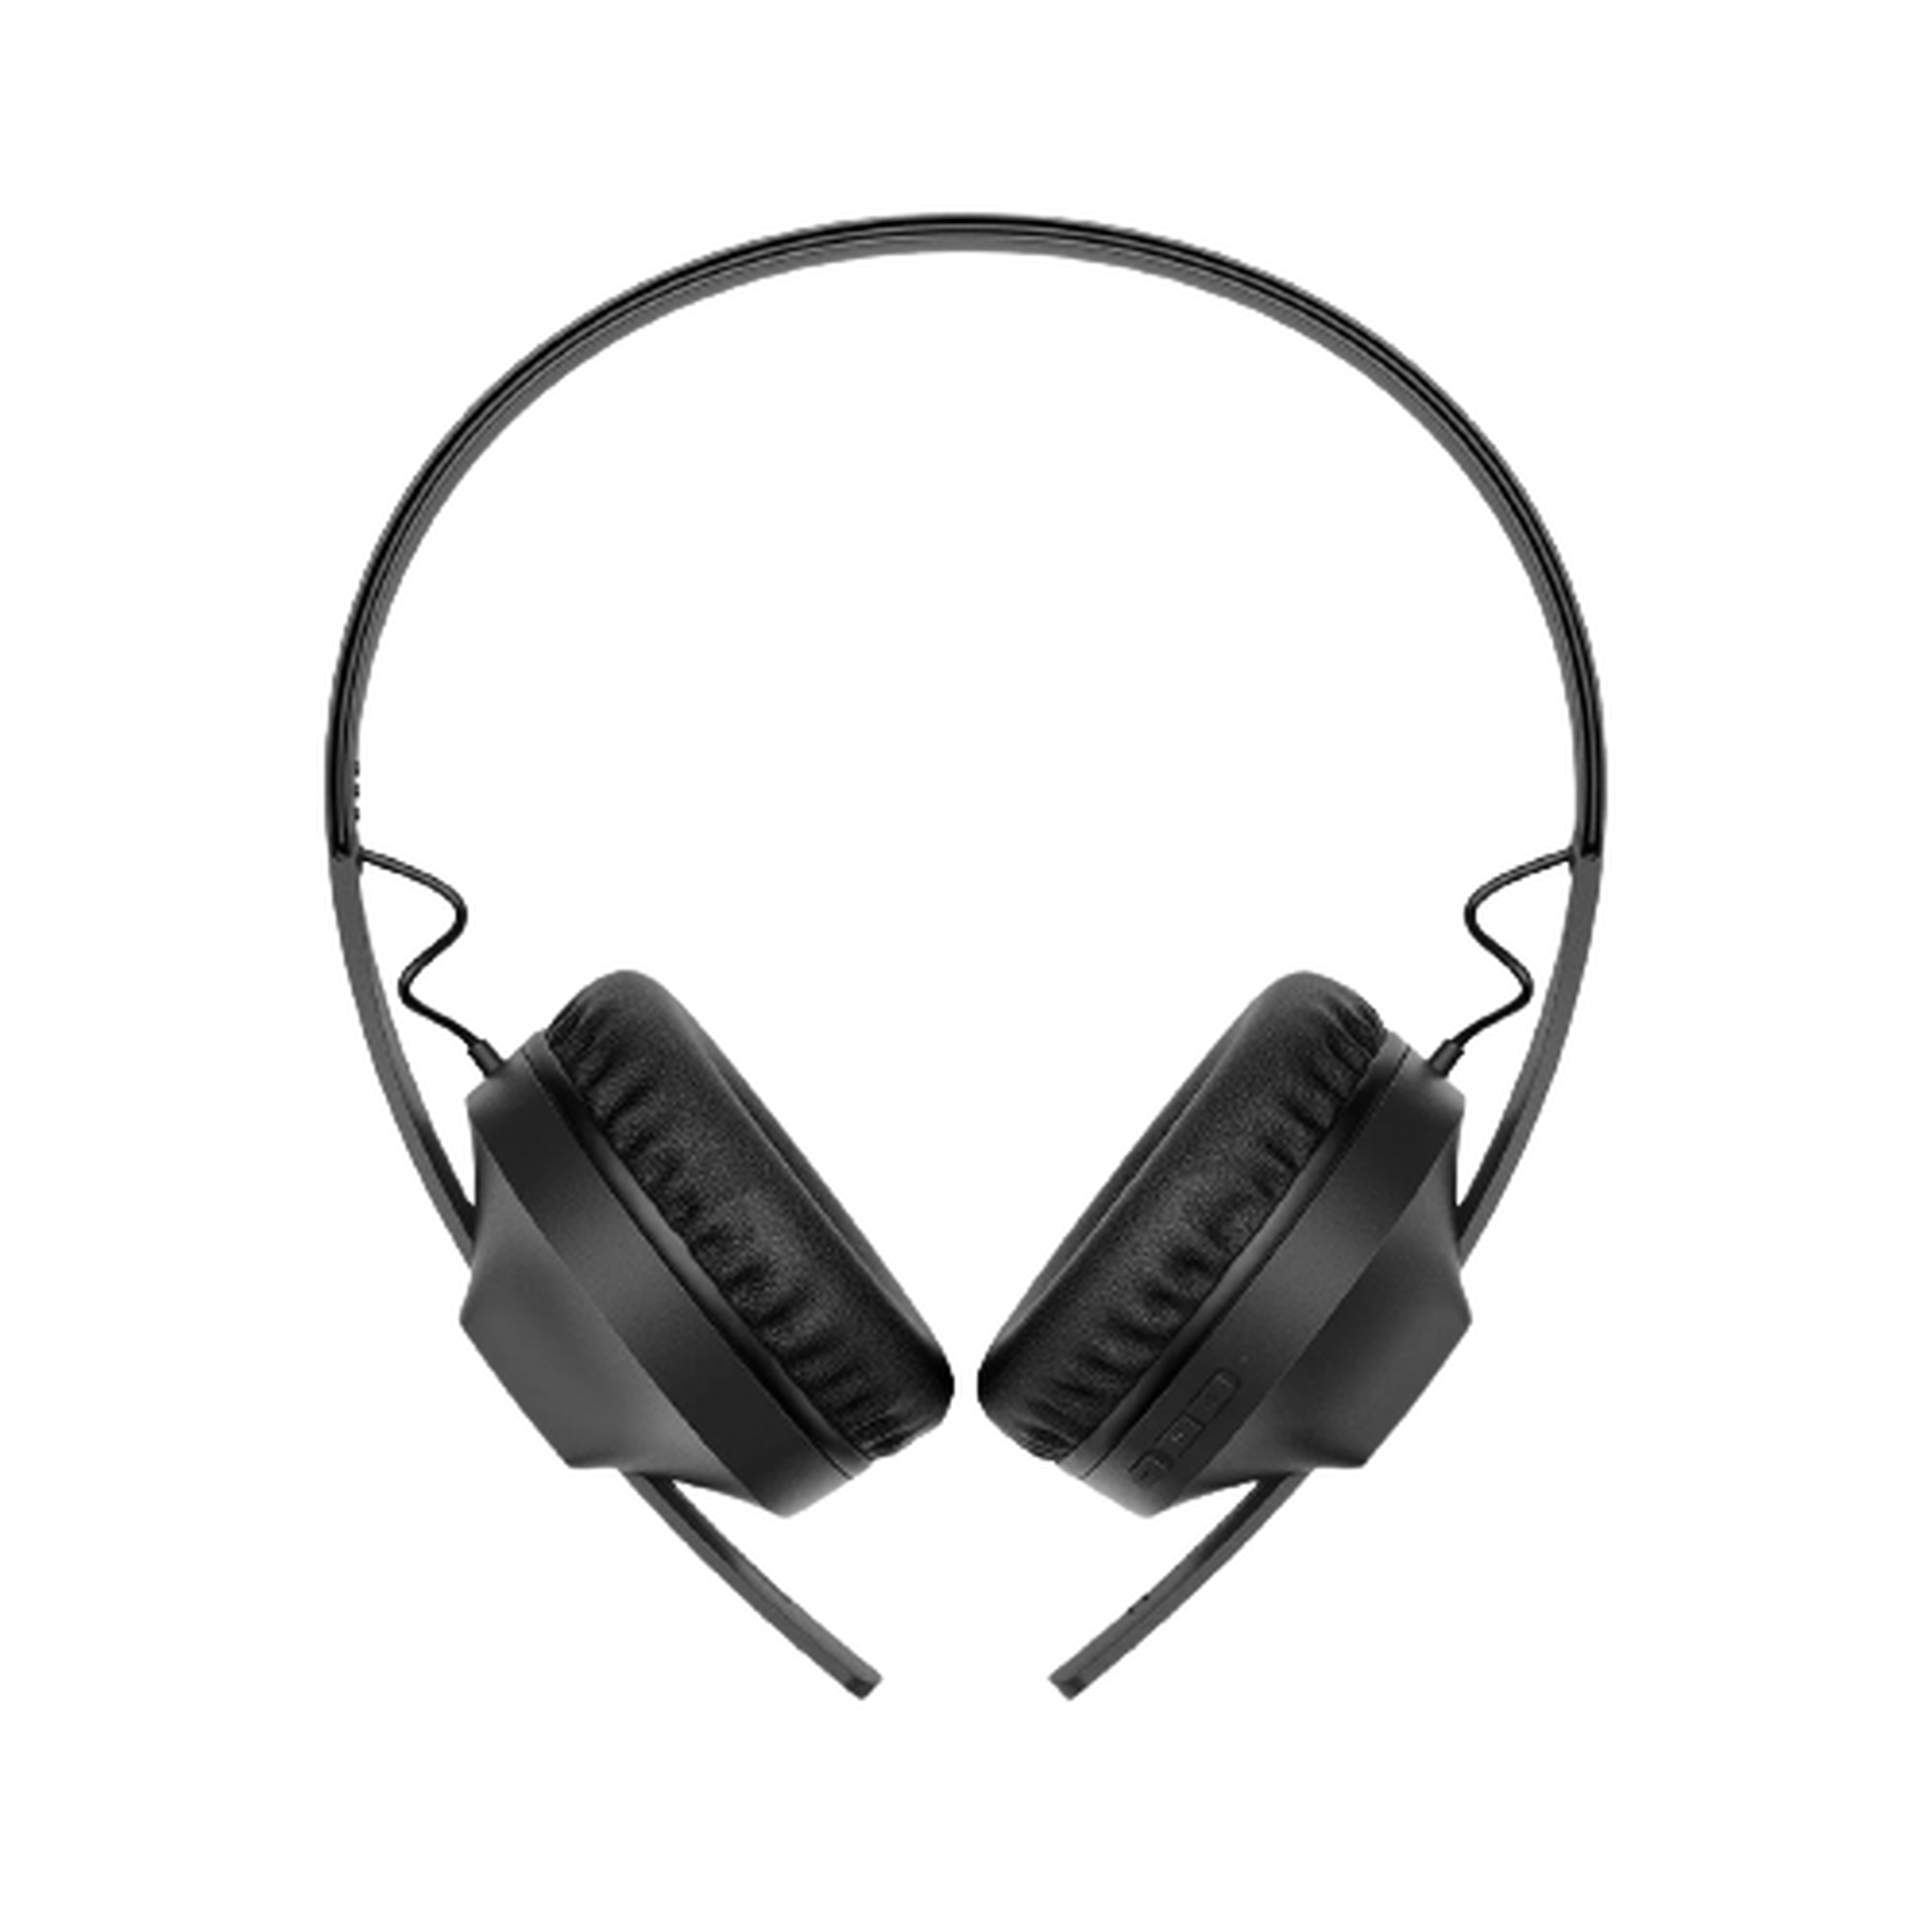 Sennheiser HD 250BT Wireless Headphones - Black